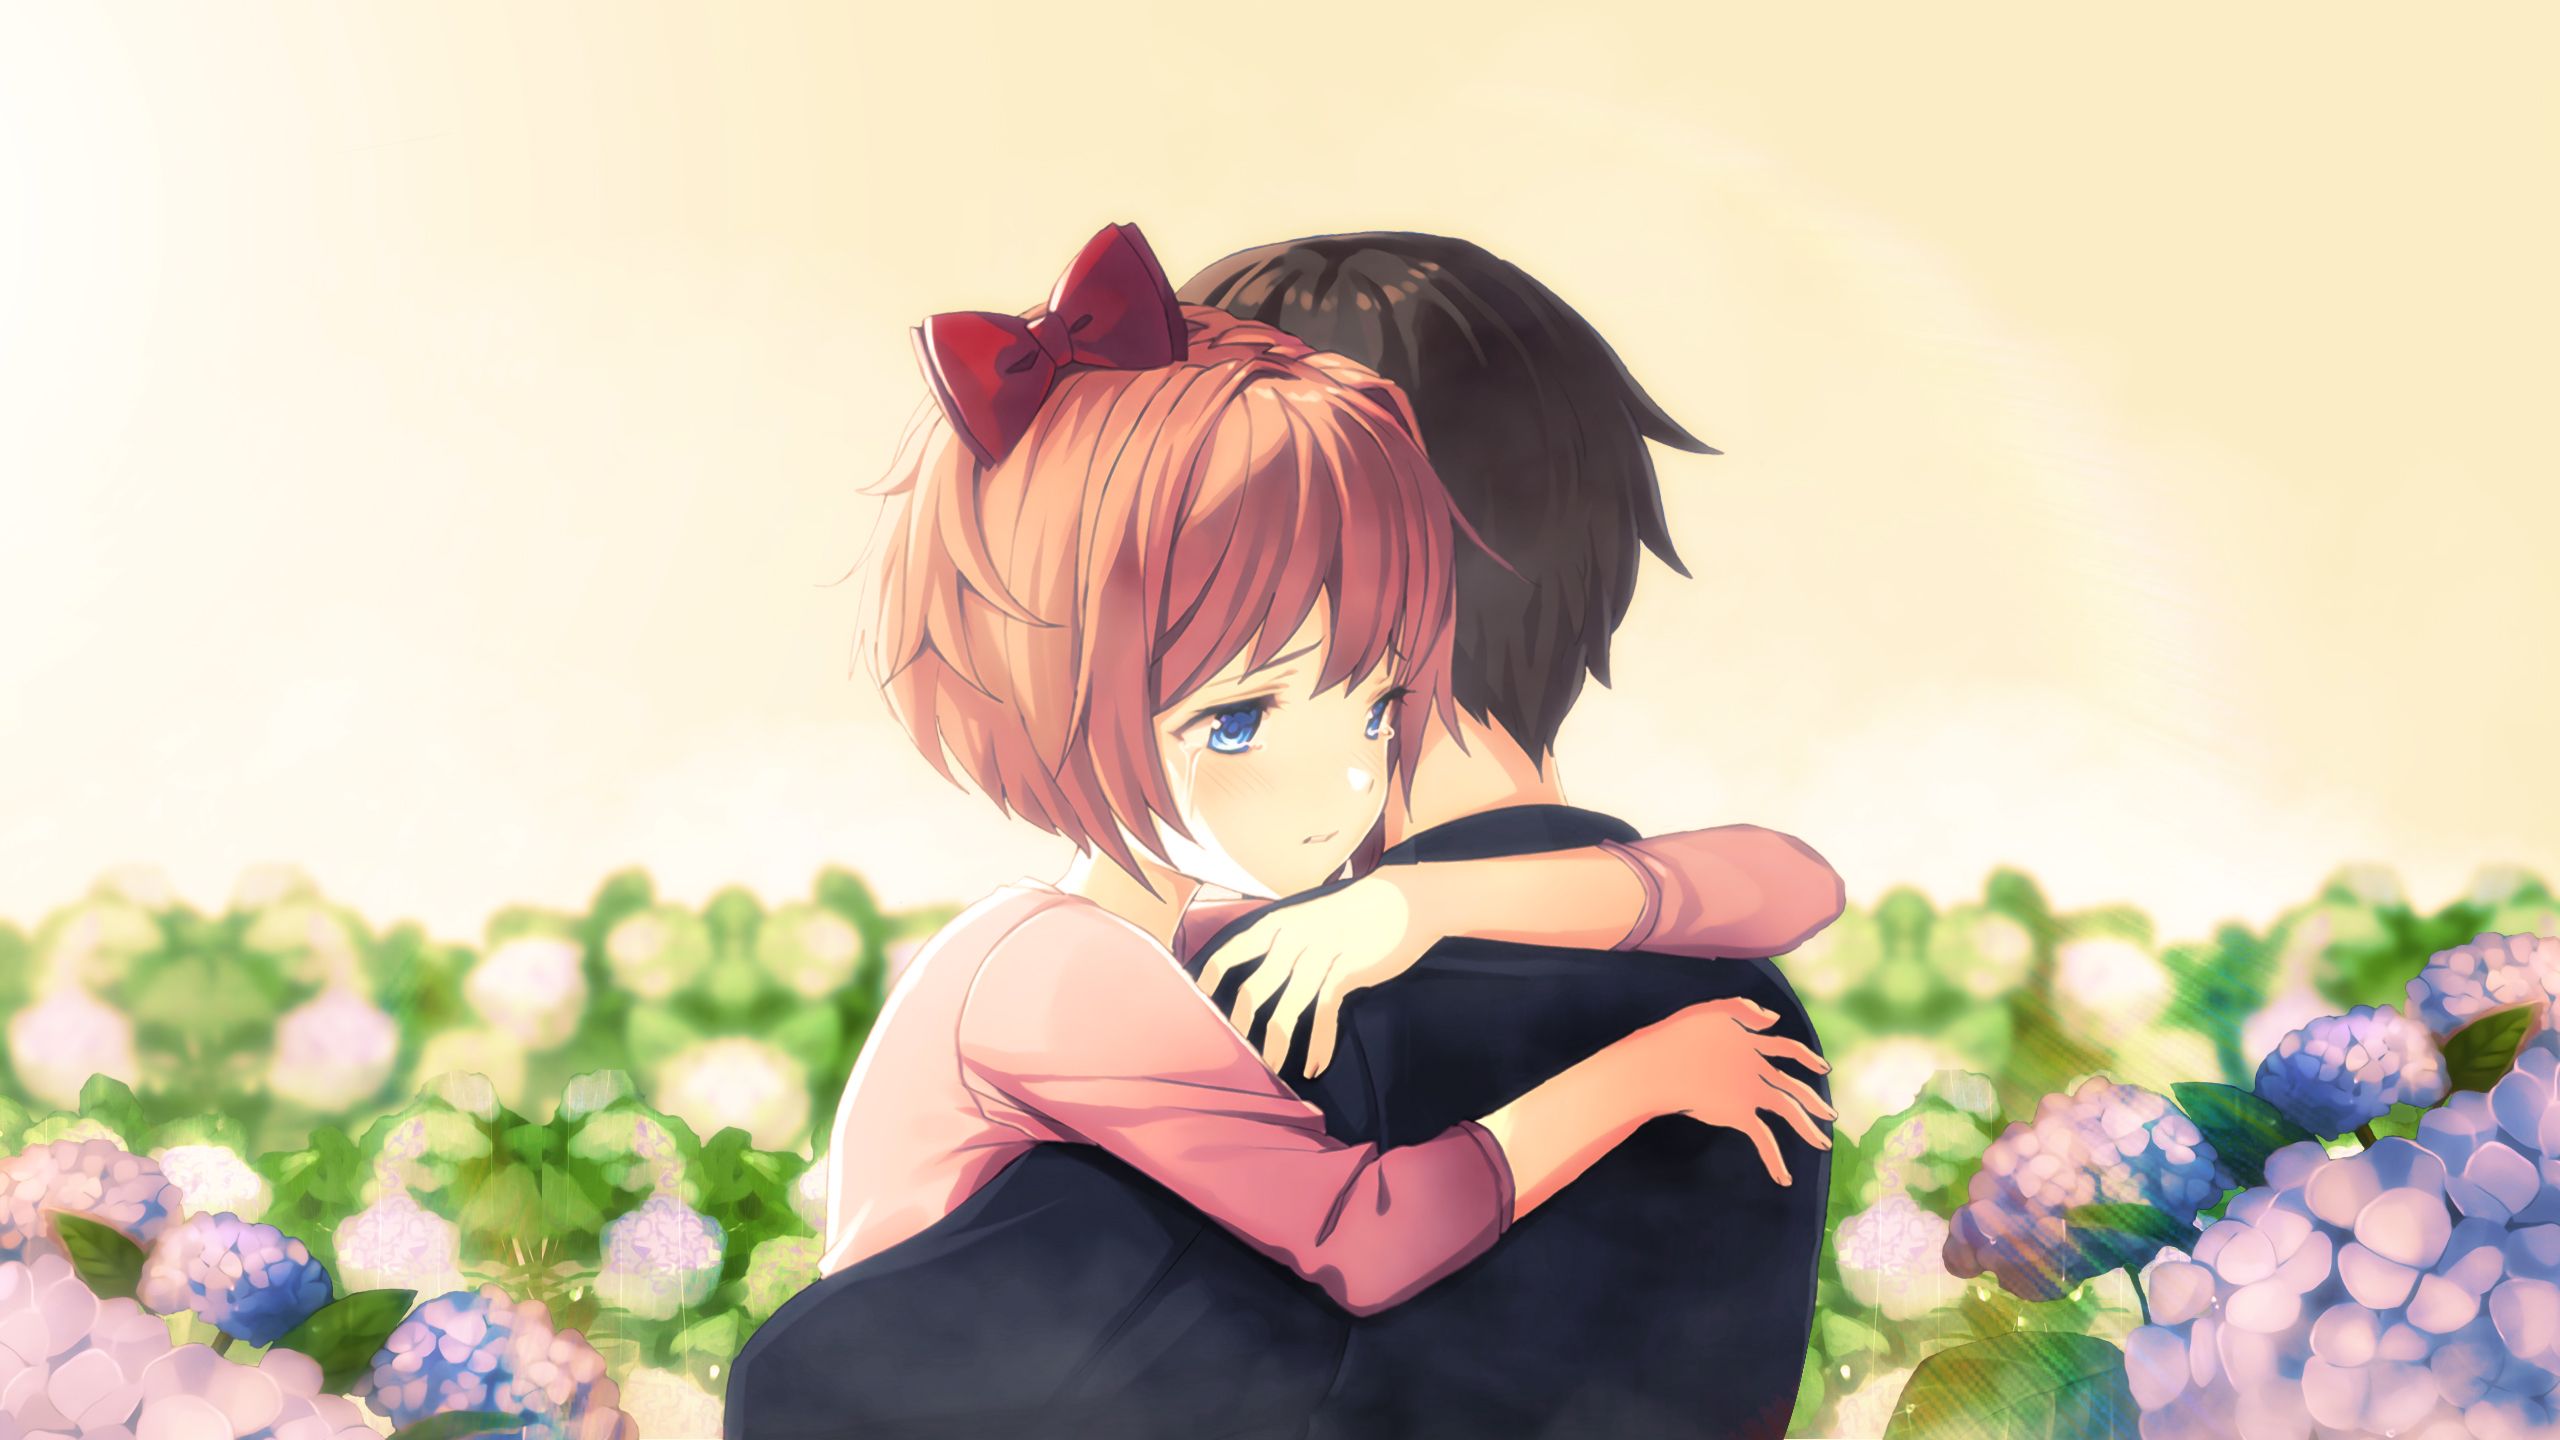 Cute Anime Couple Hug, HD Anime, 4k Wallpaper, Image